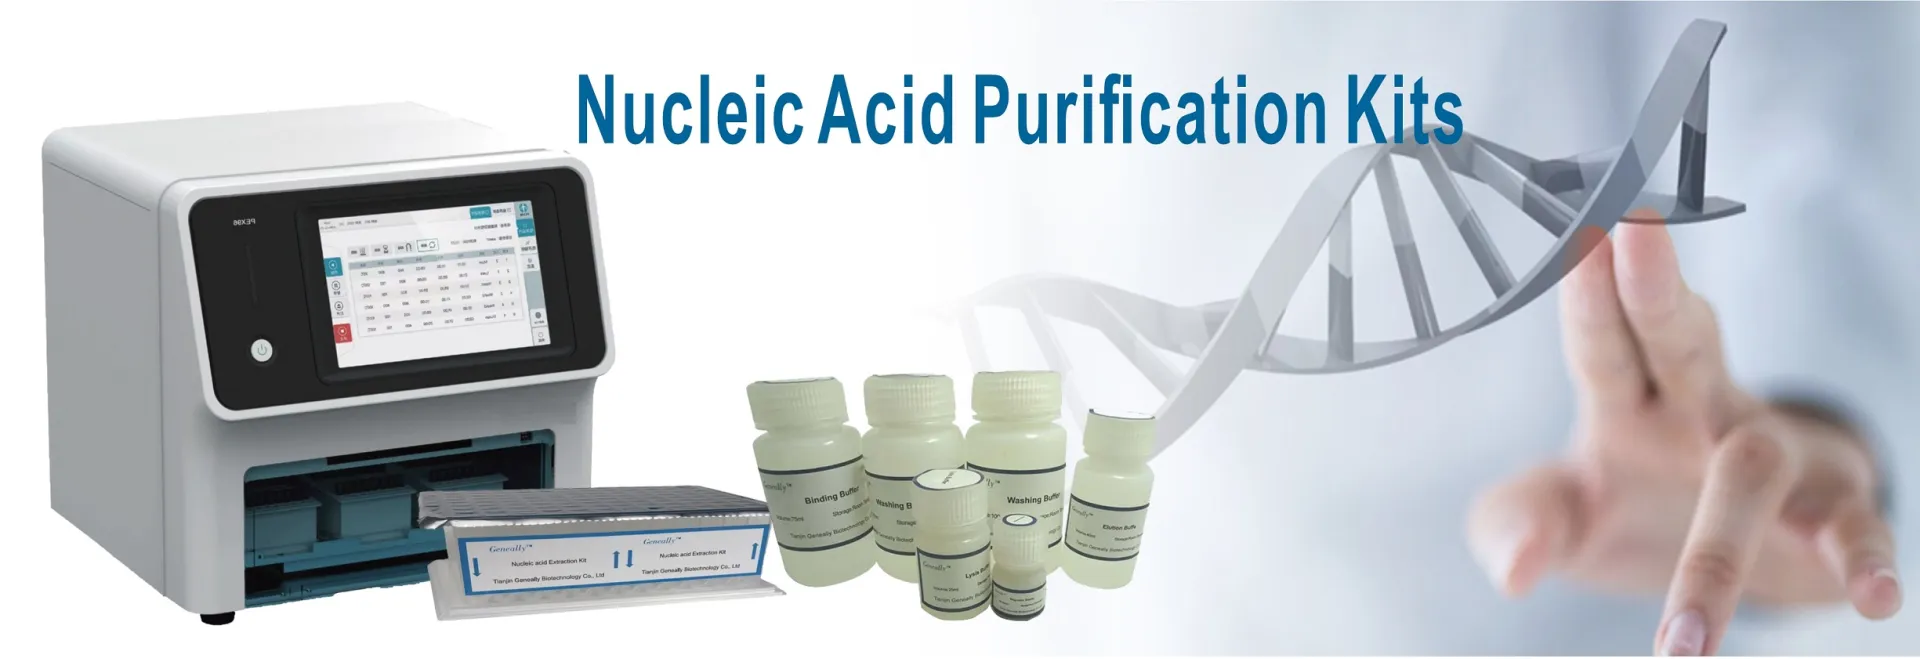 Nucleic Acid Purification Kits